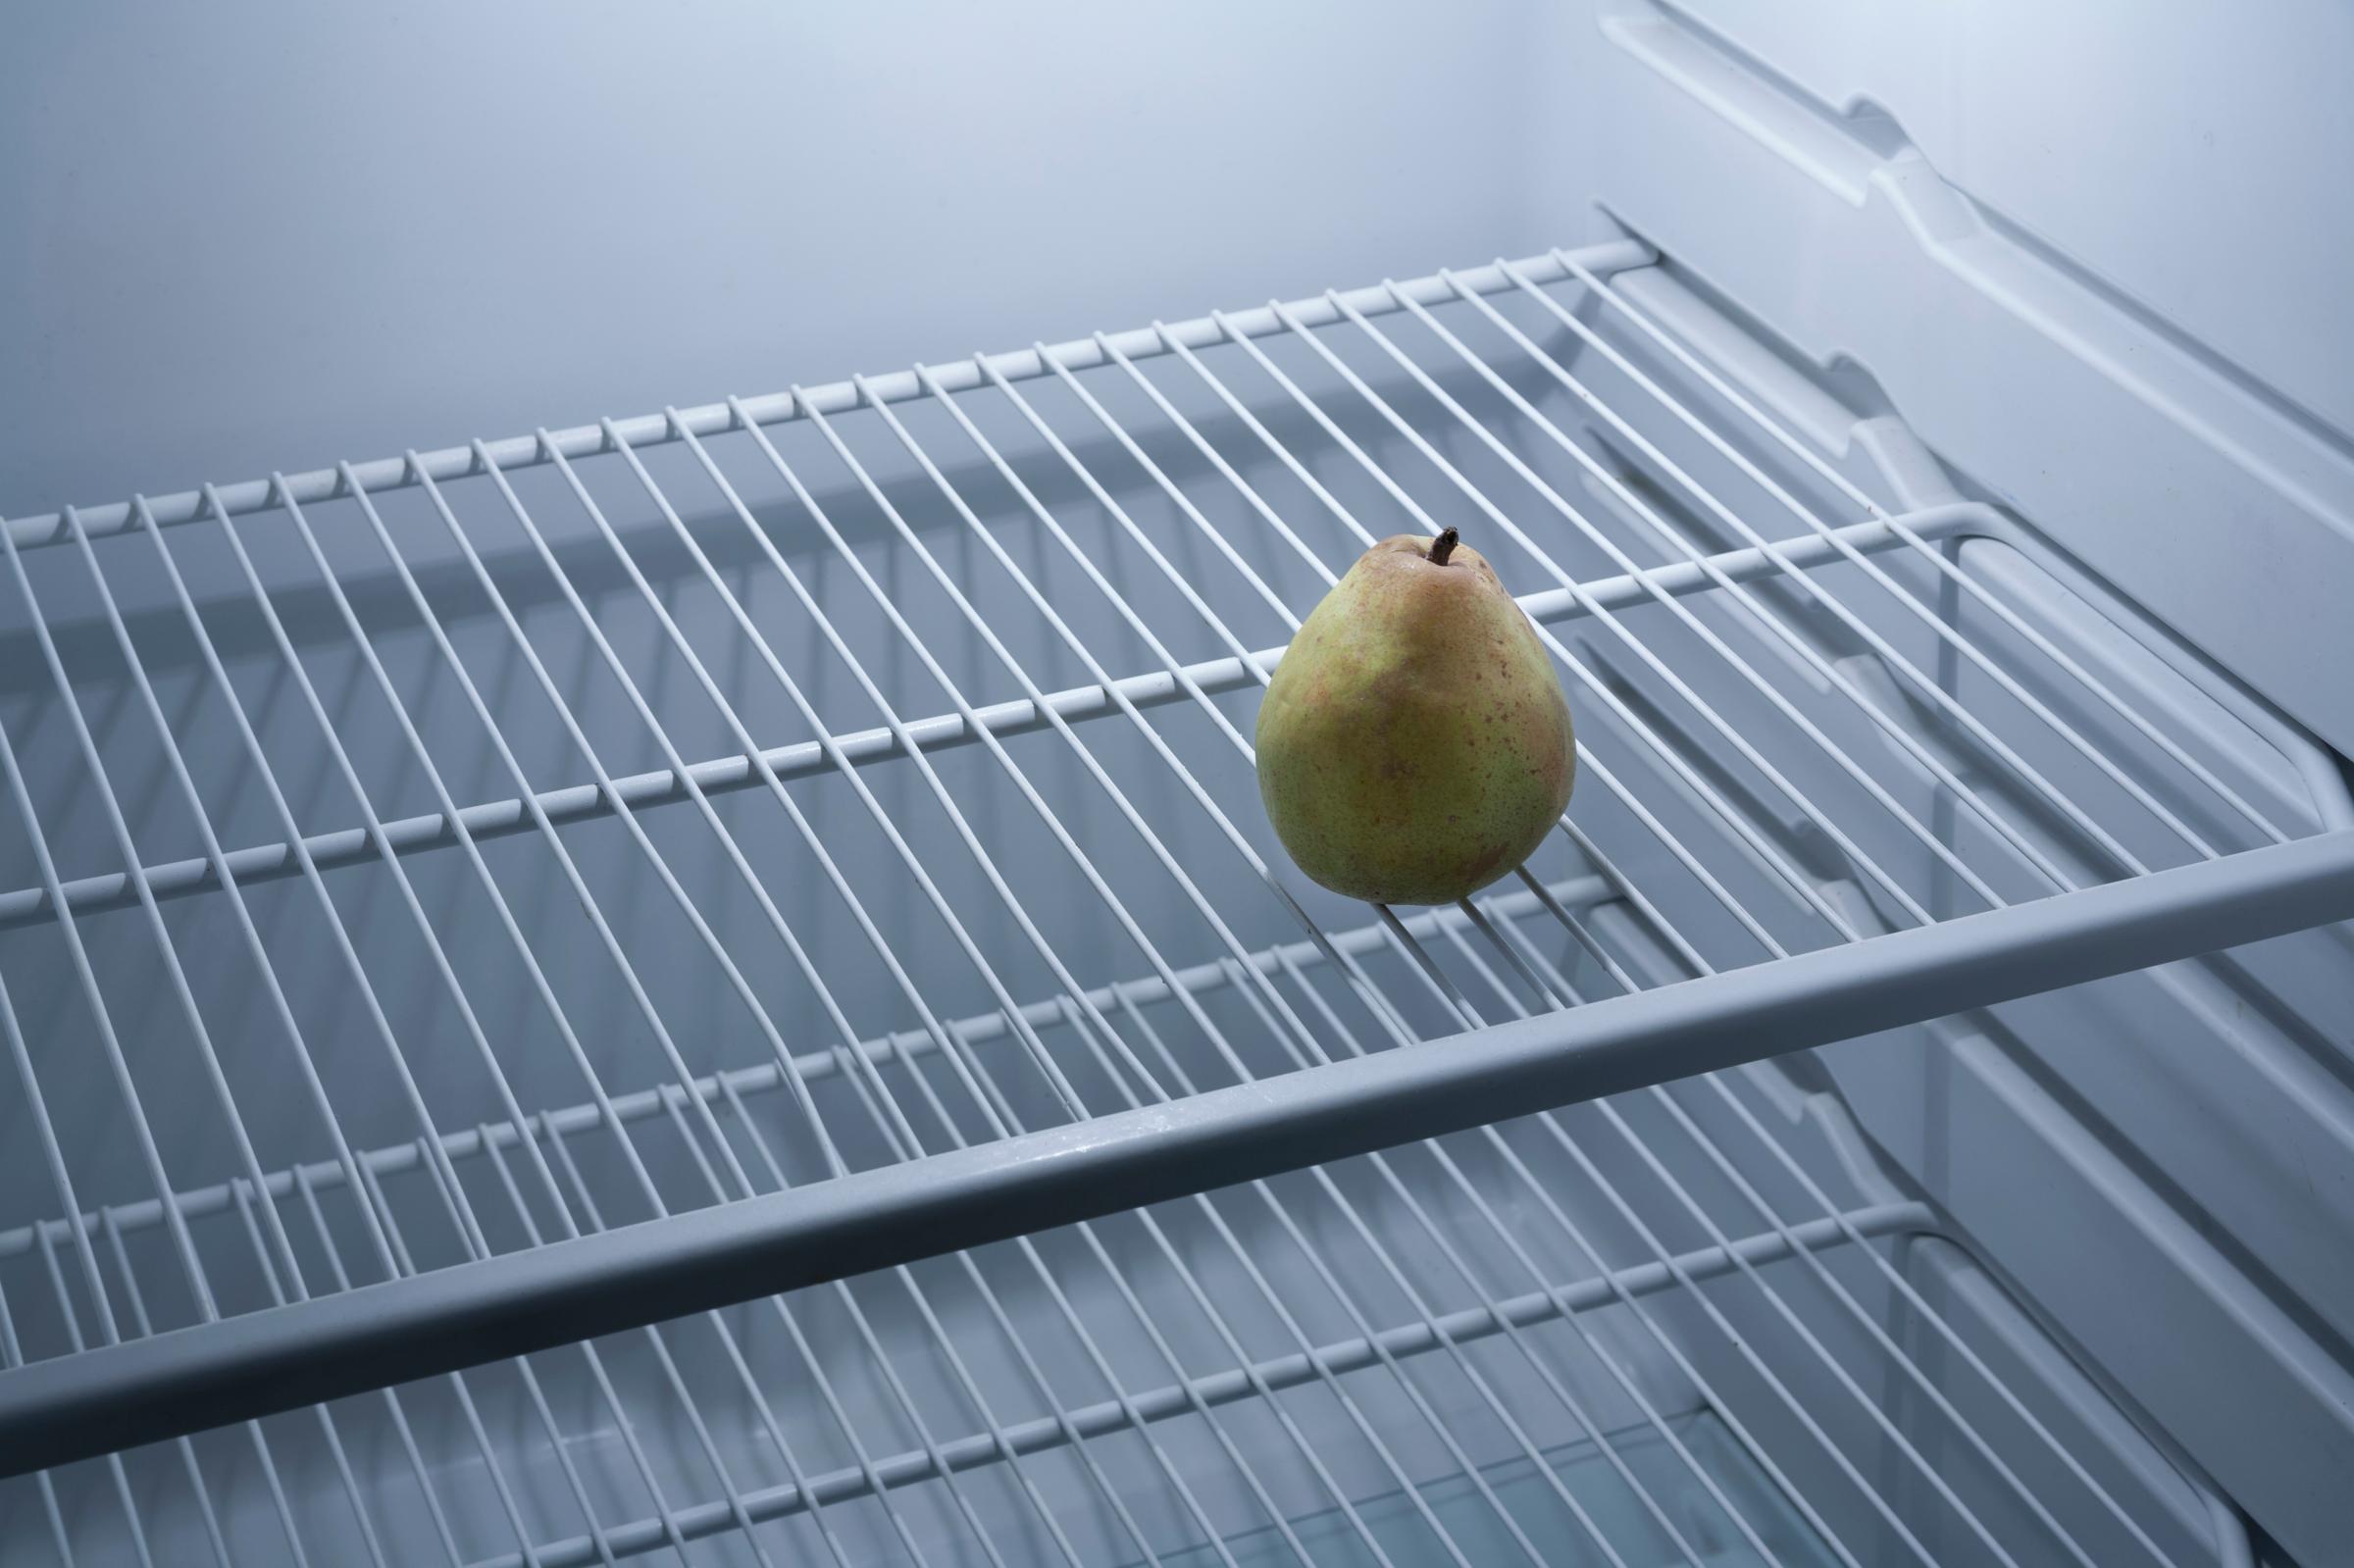 Pear in a refrigerator